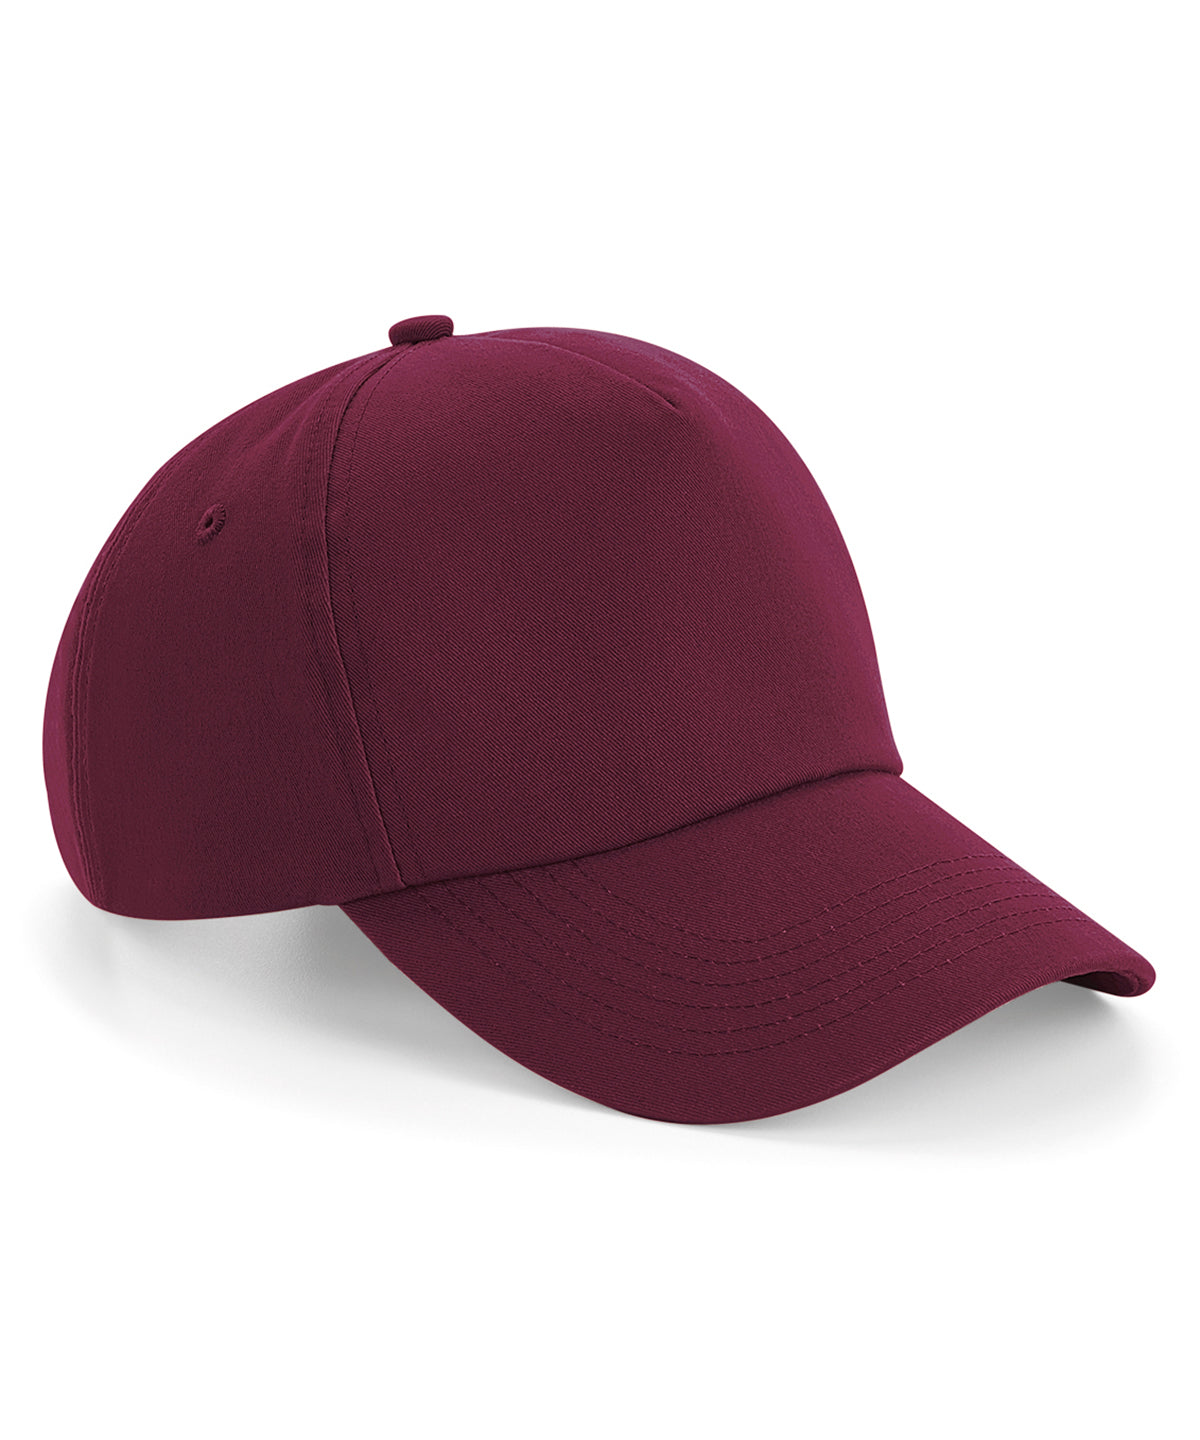 Personalised Caps - Burgundy Beechfield Authentic 5-panel cap